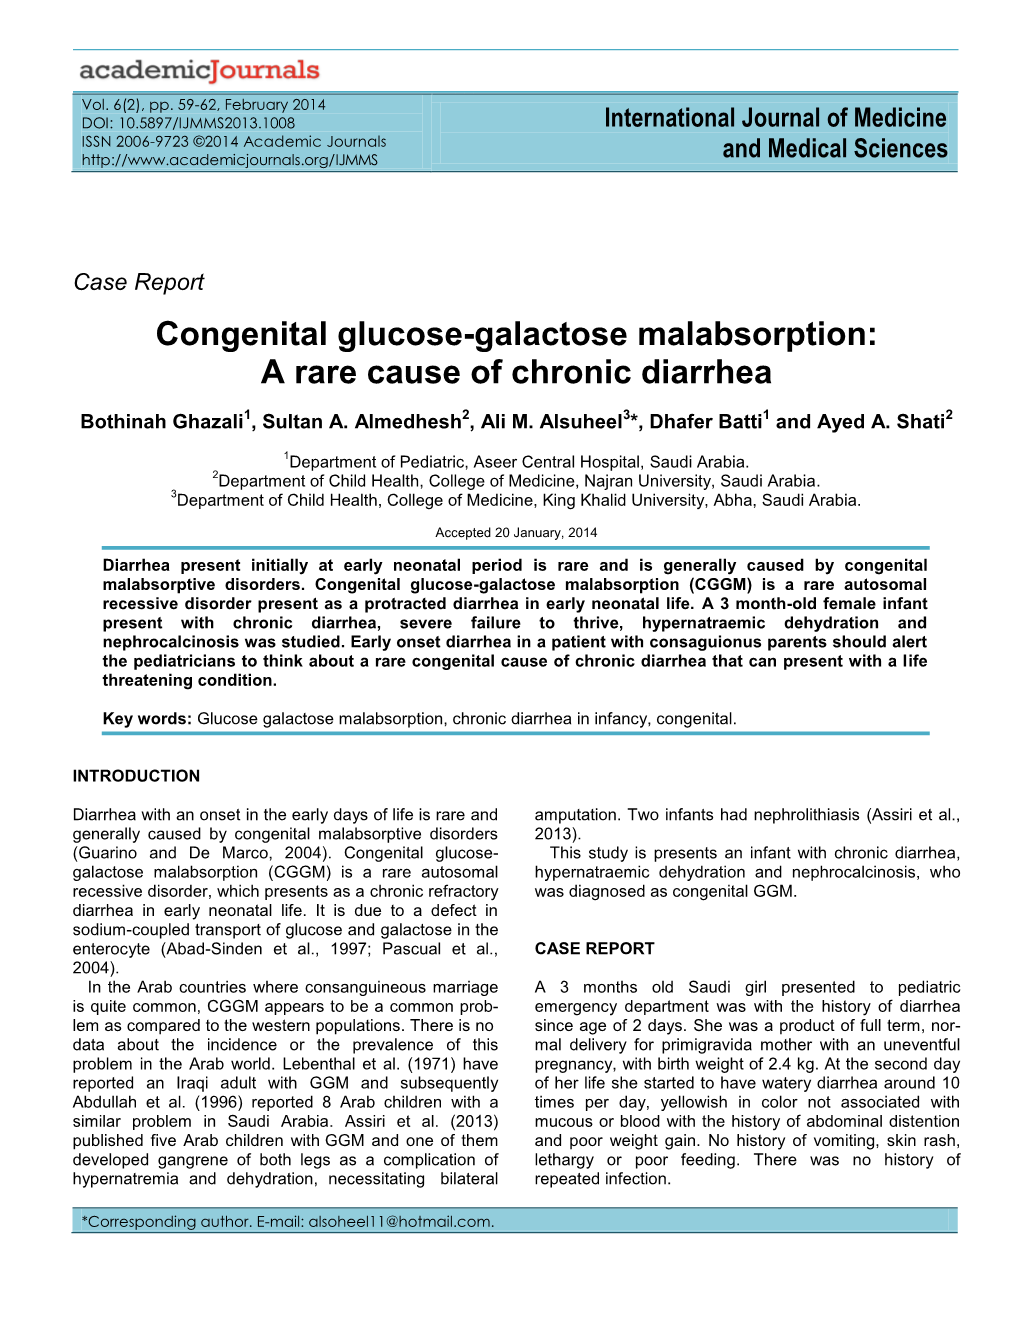 Congenital Glucose-Galactose Malabsorption: a Rare Cause of Chronic Diarrhea